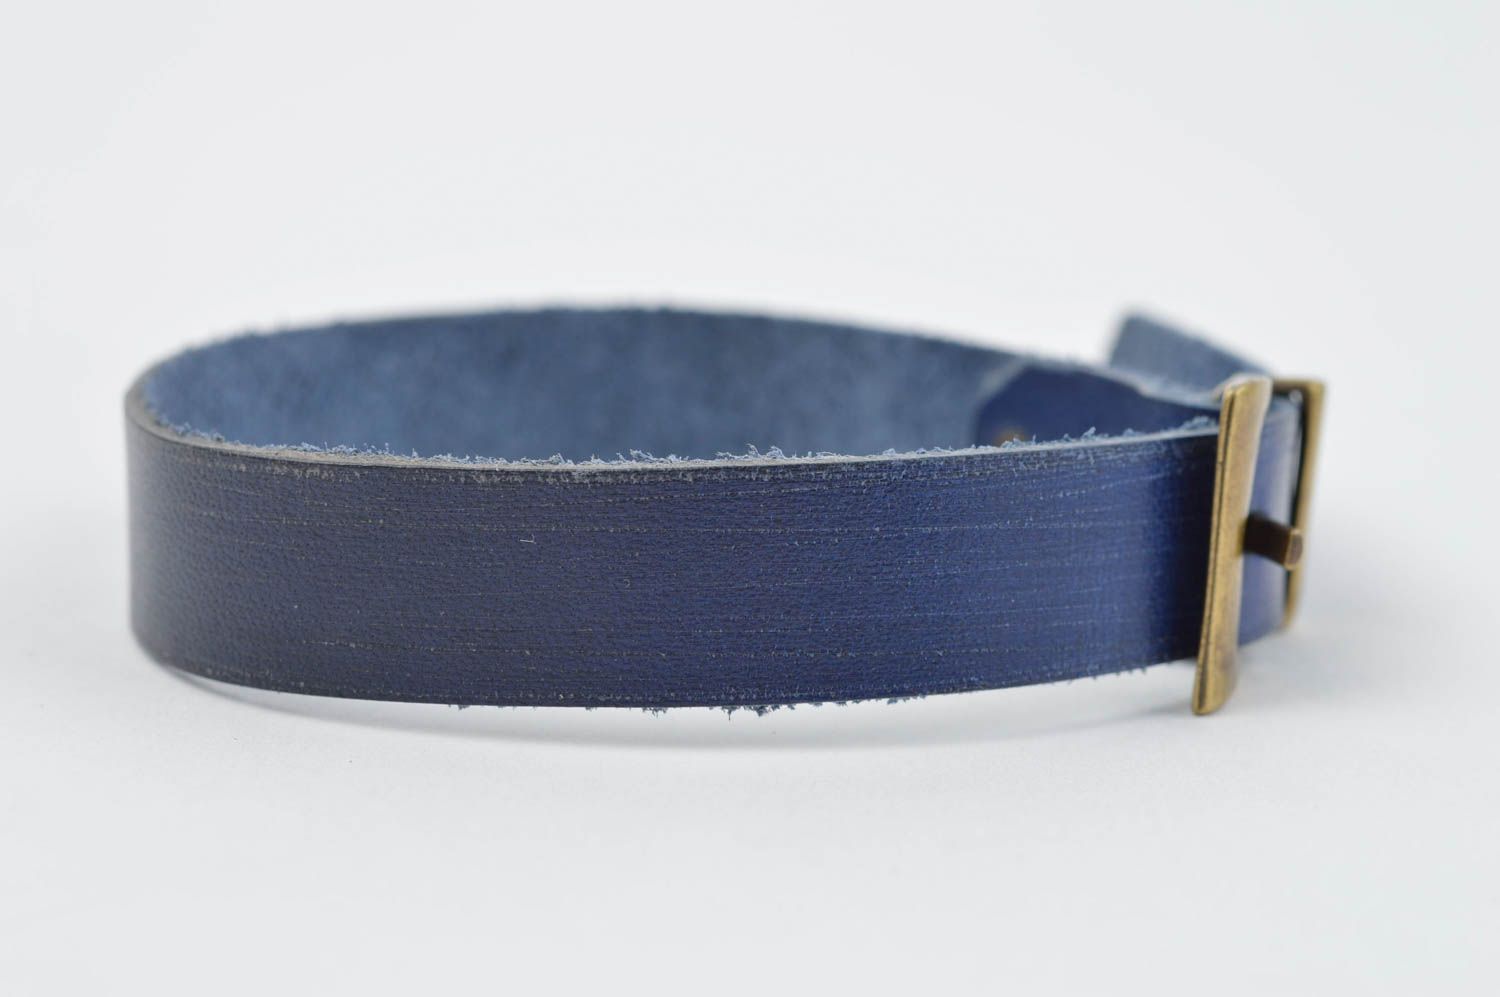 Stylish handmade leather bracelet leather goods fashion accessories gift ideas photo 3